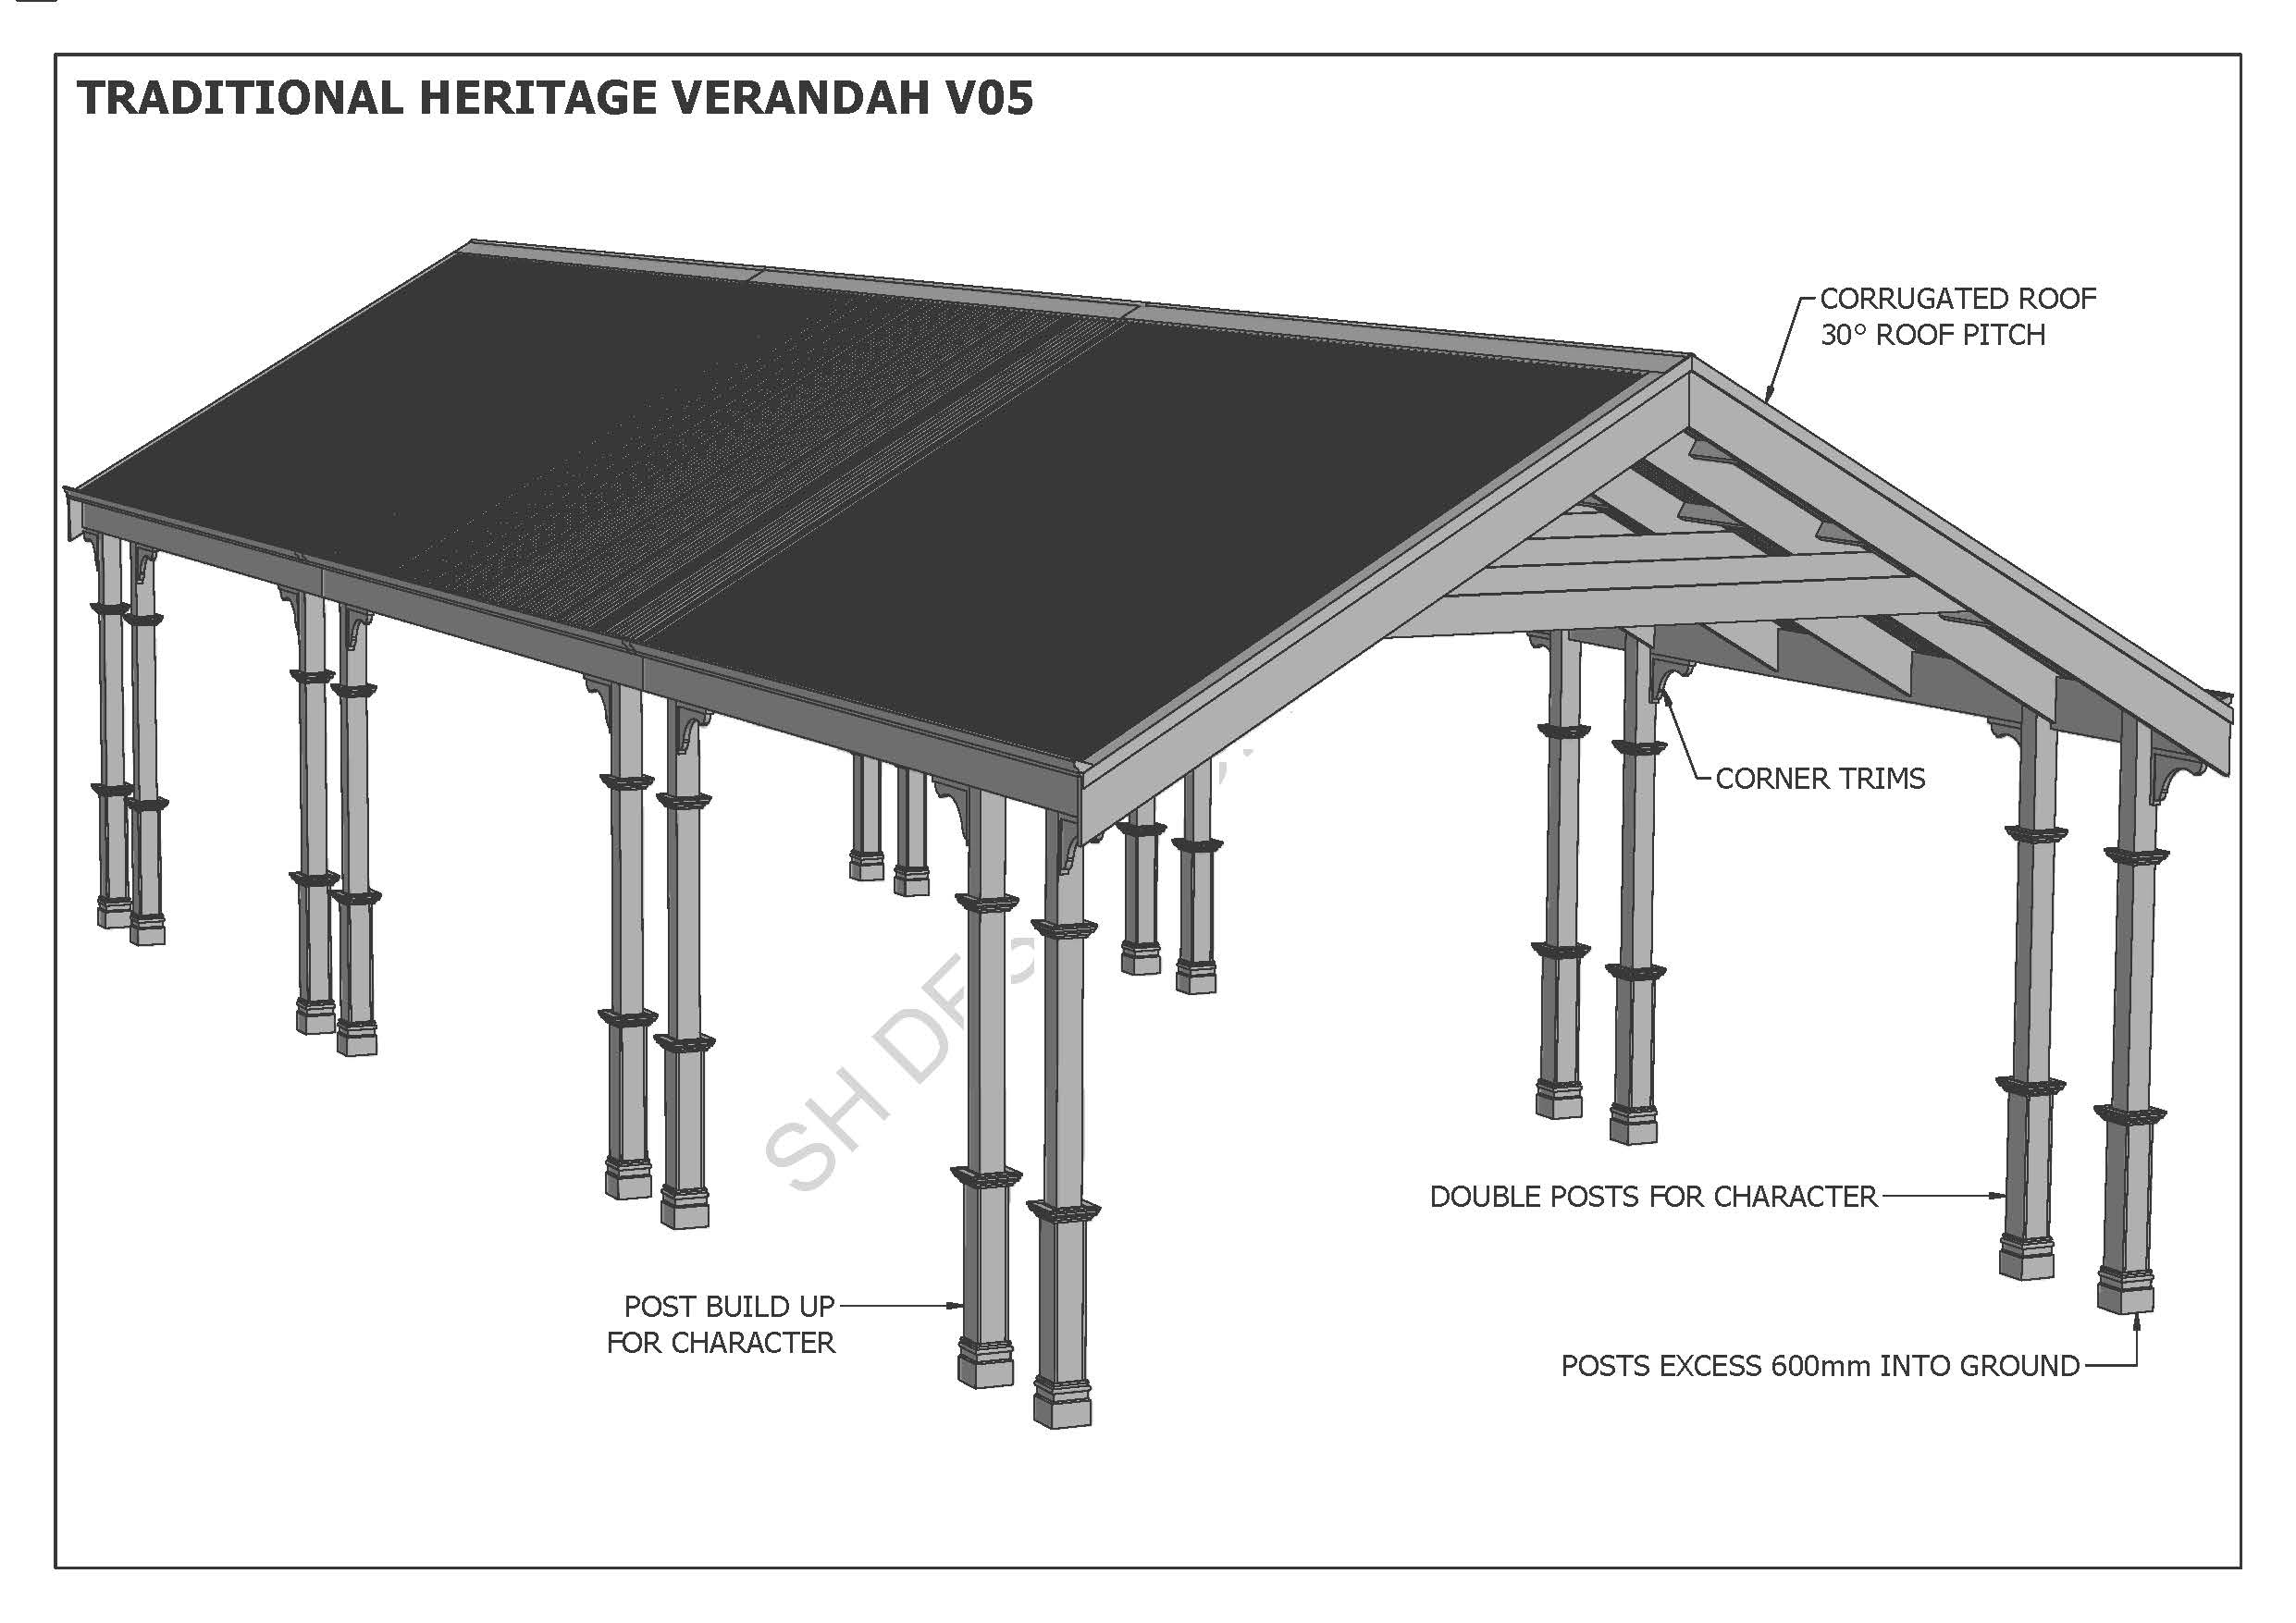 V04 TRADITIONAL HERITAGE CARPORT VERANDAH Full Building Plans 